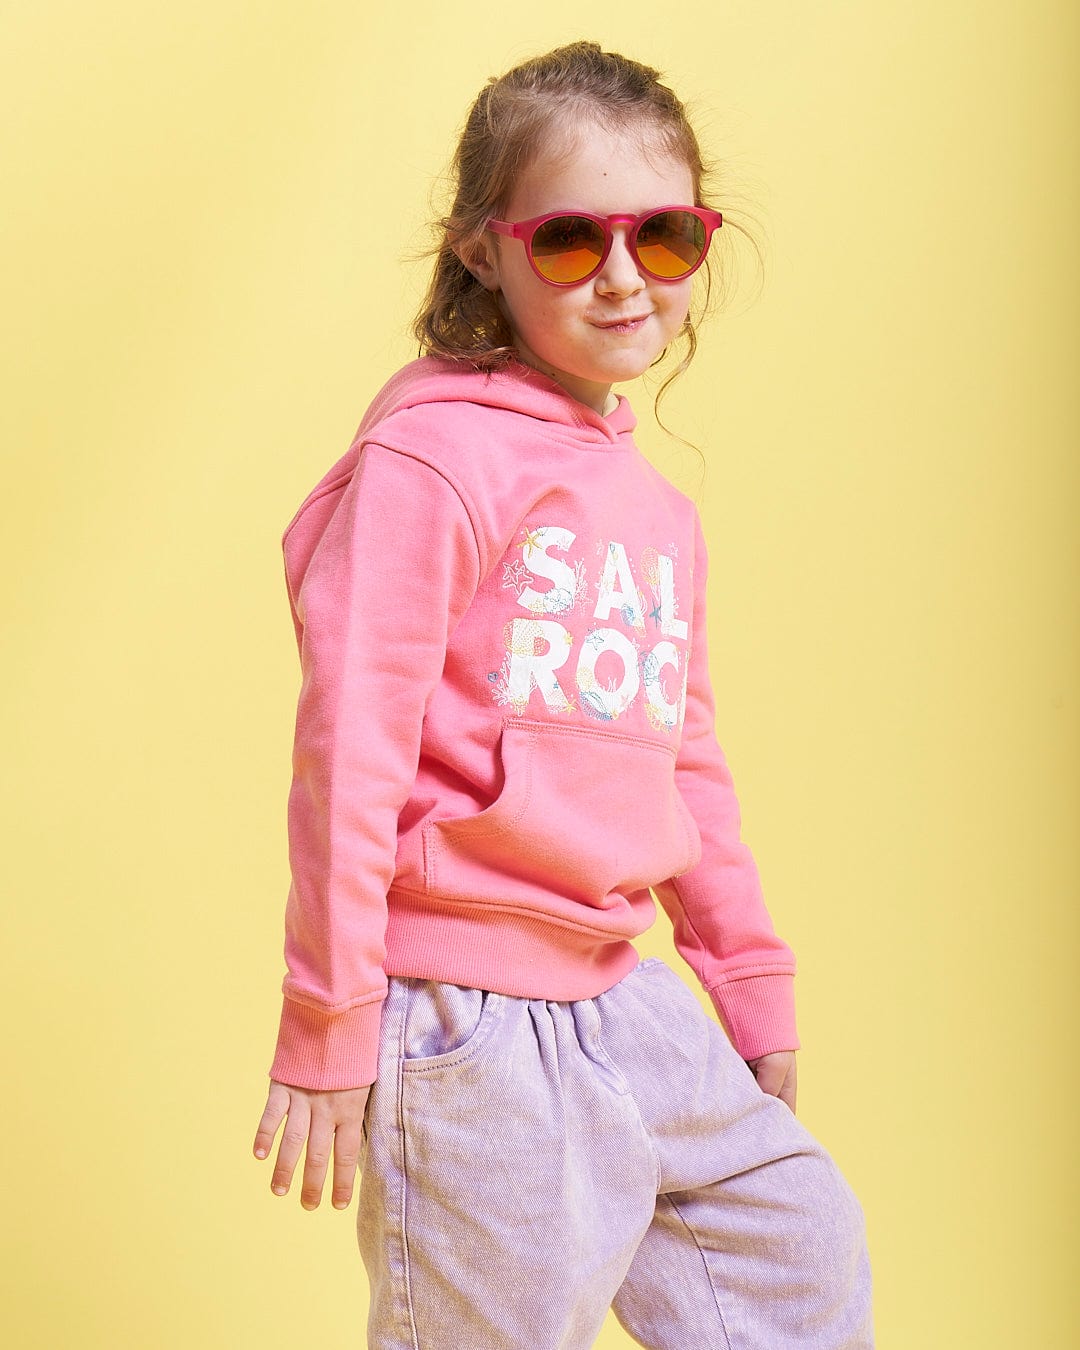 A little girl wearing Saltrock Seabed - Kids Pop Hoodie - Pink sunglasses and a pink sweatshirt.